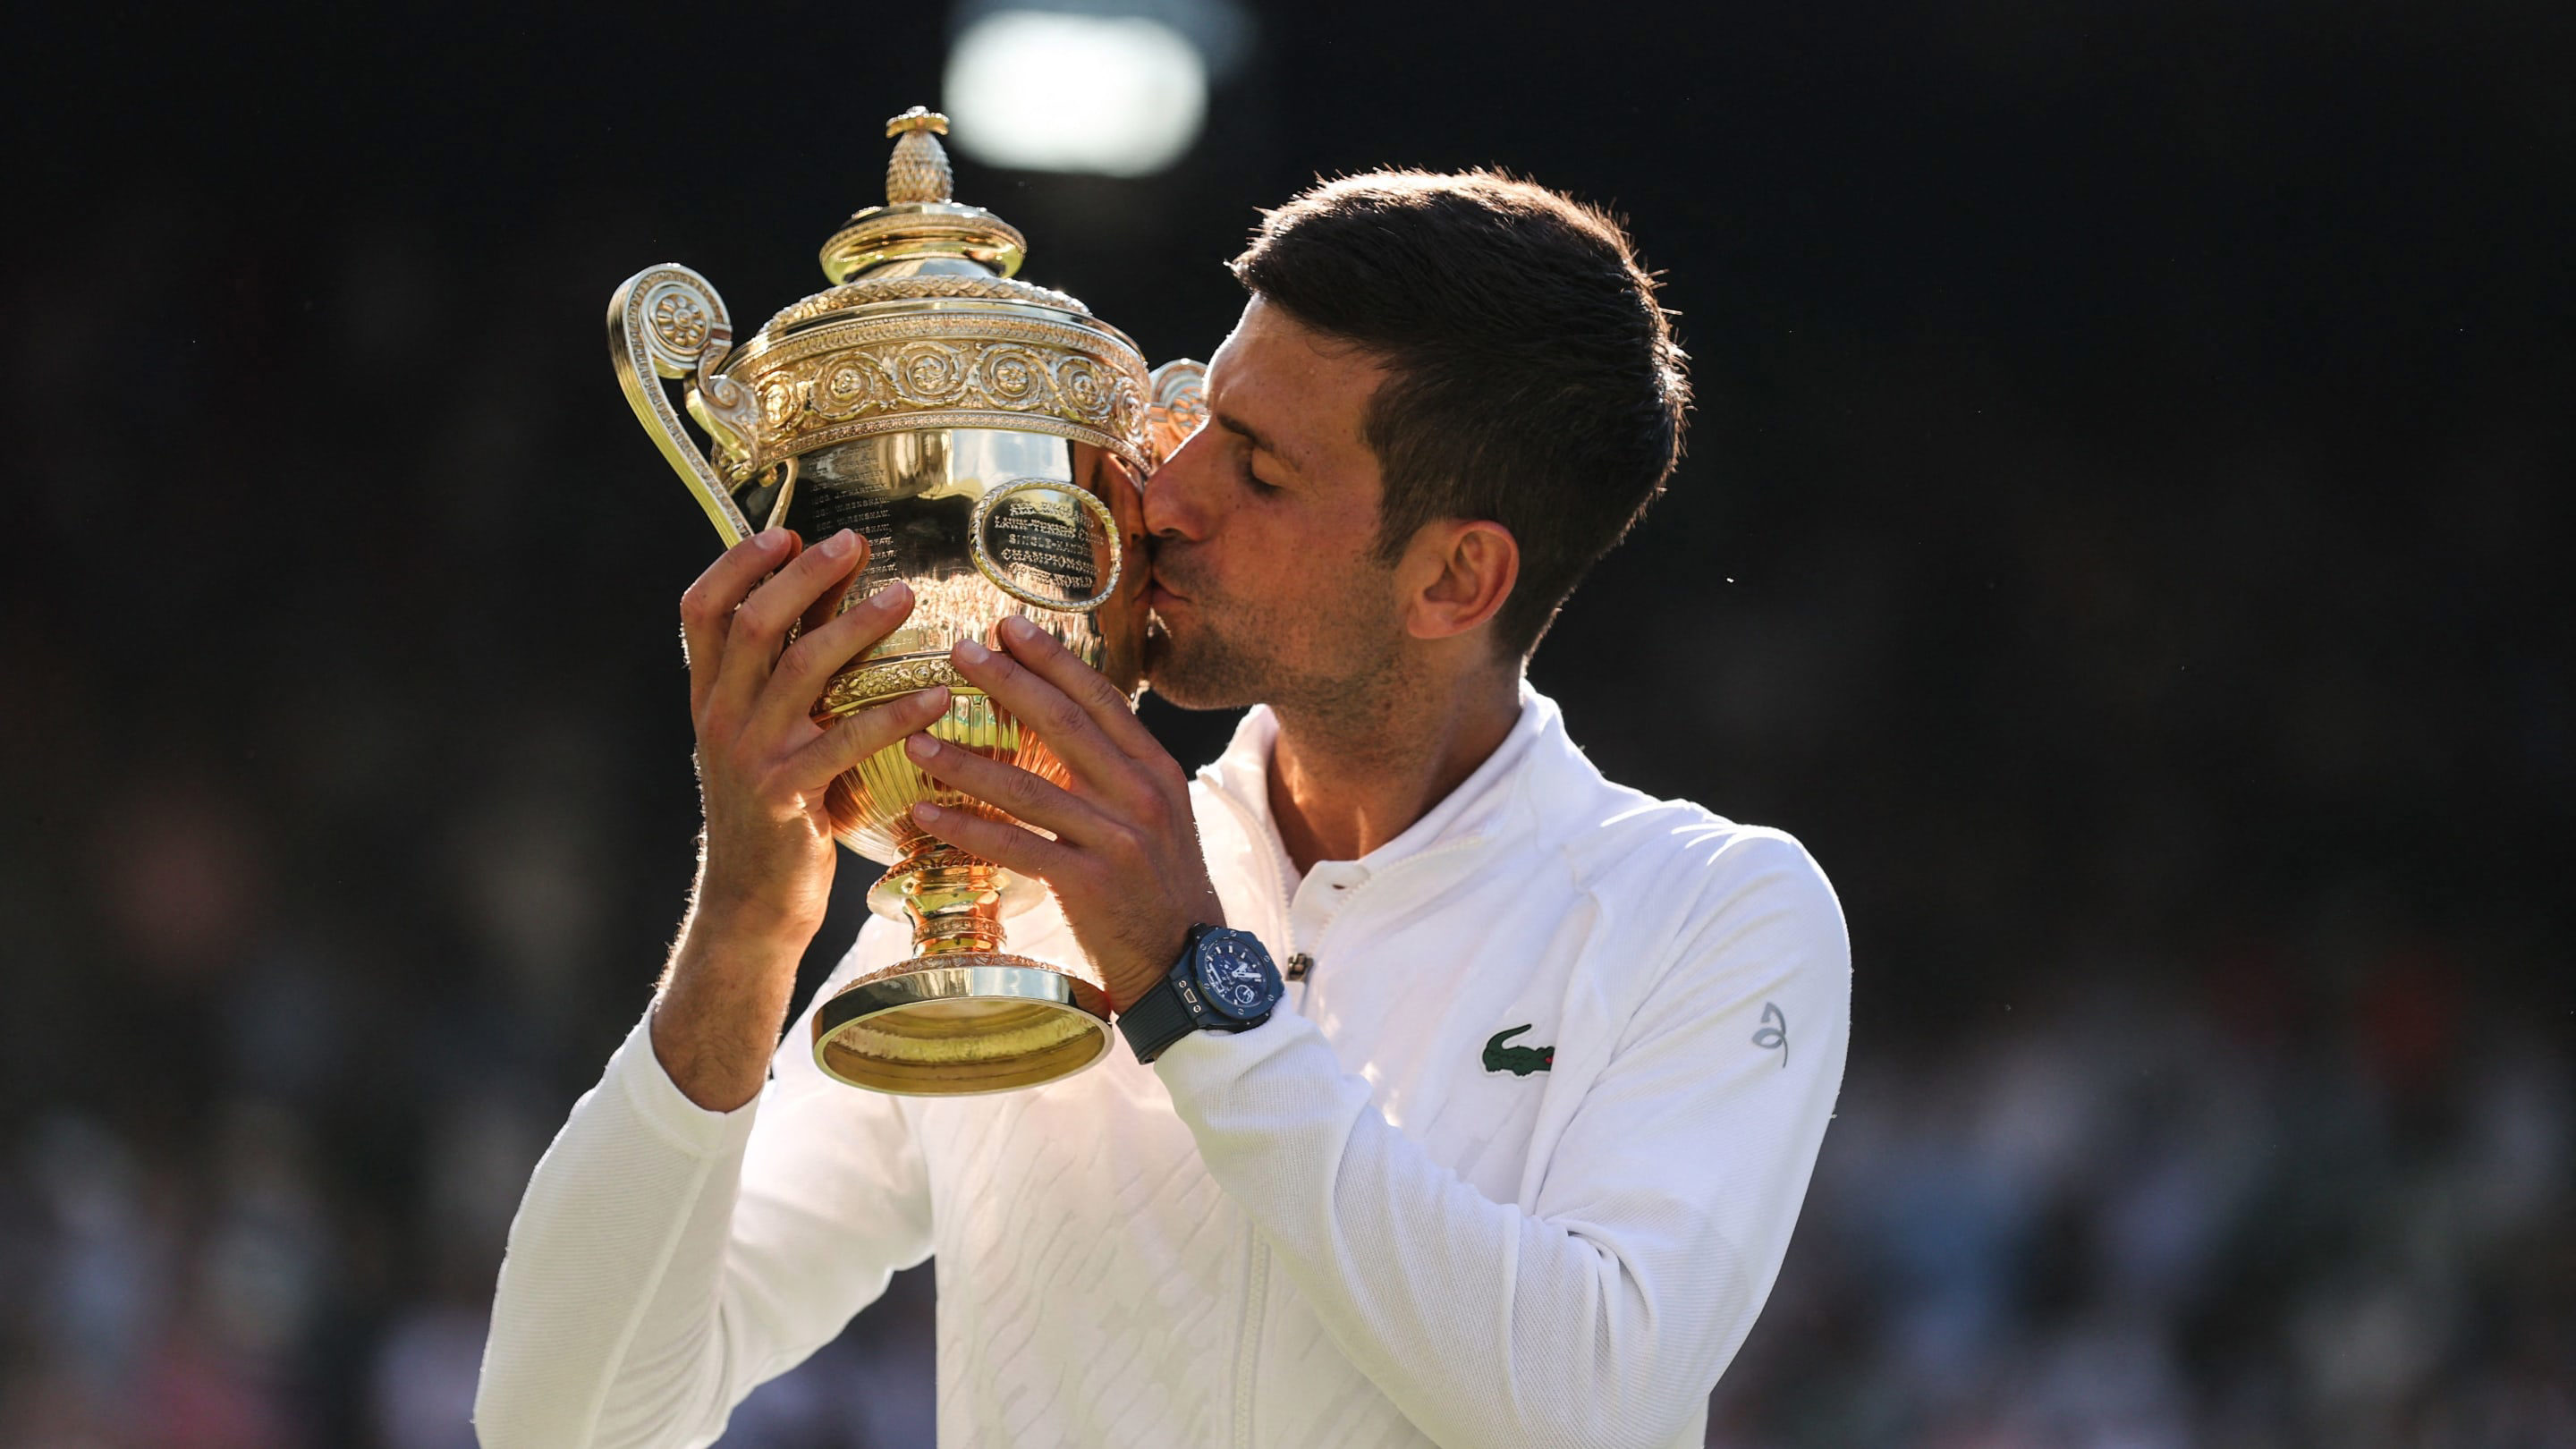 Wimbledon Prize Money, Purse Breakdown How Much Do the Winners Make?